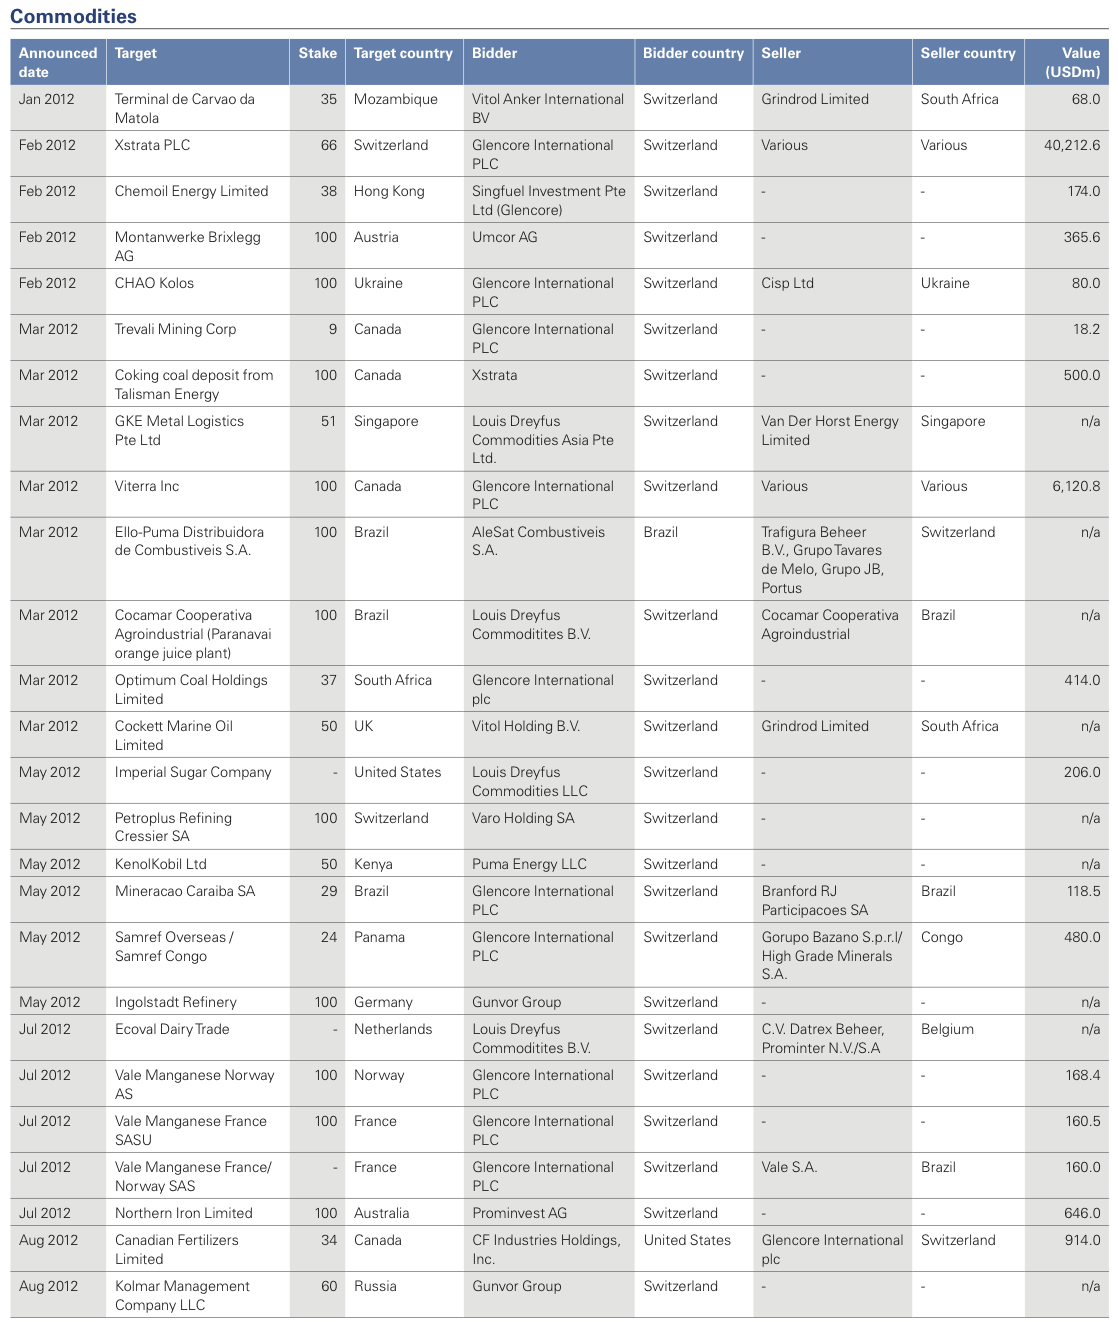 Figure 18: List of 2012 Swiss M&ATransactions